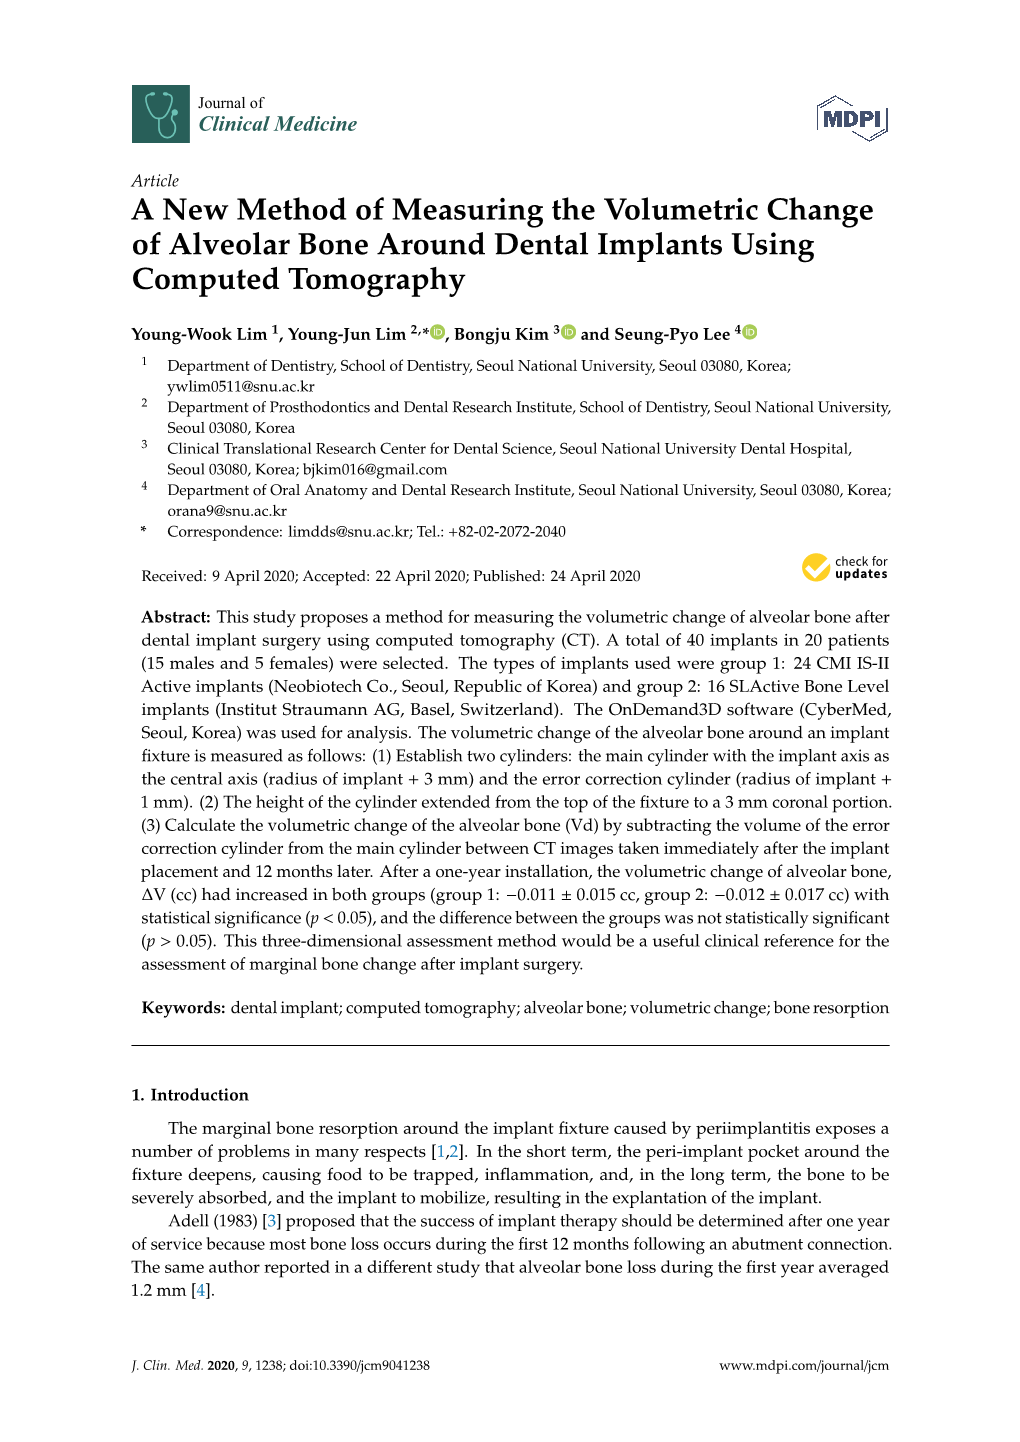 A New Method of Measuring the Volumetric Change of Alveolar Bone Around Dental Implants Using Computed Tomography